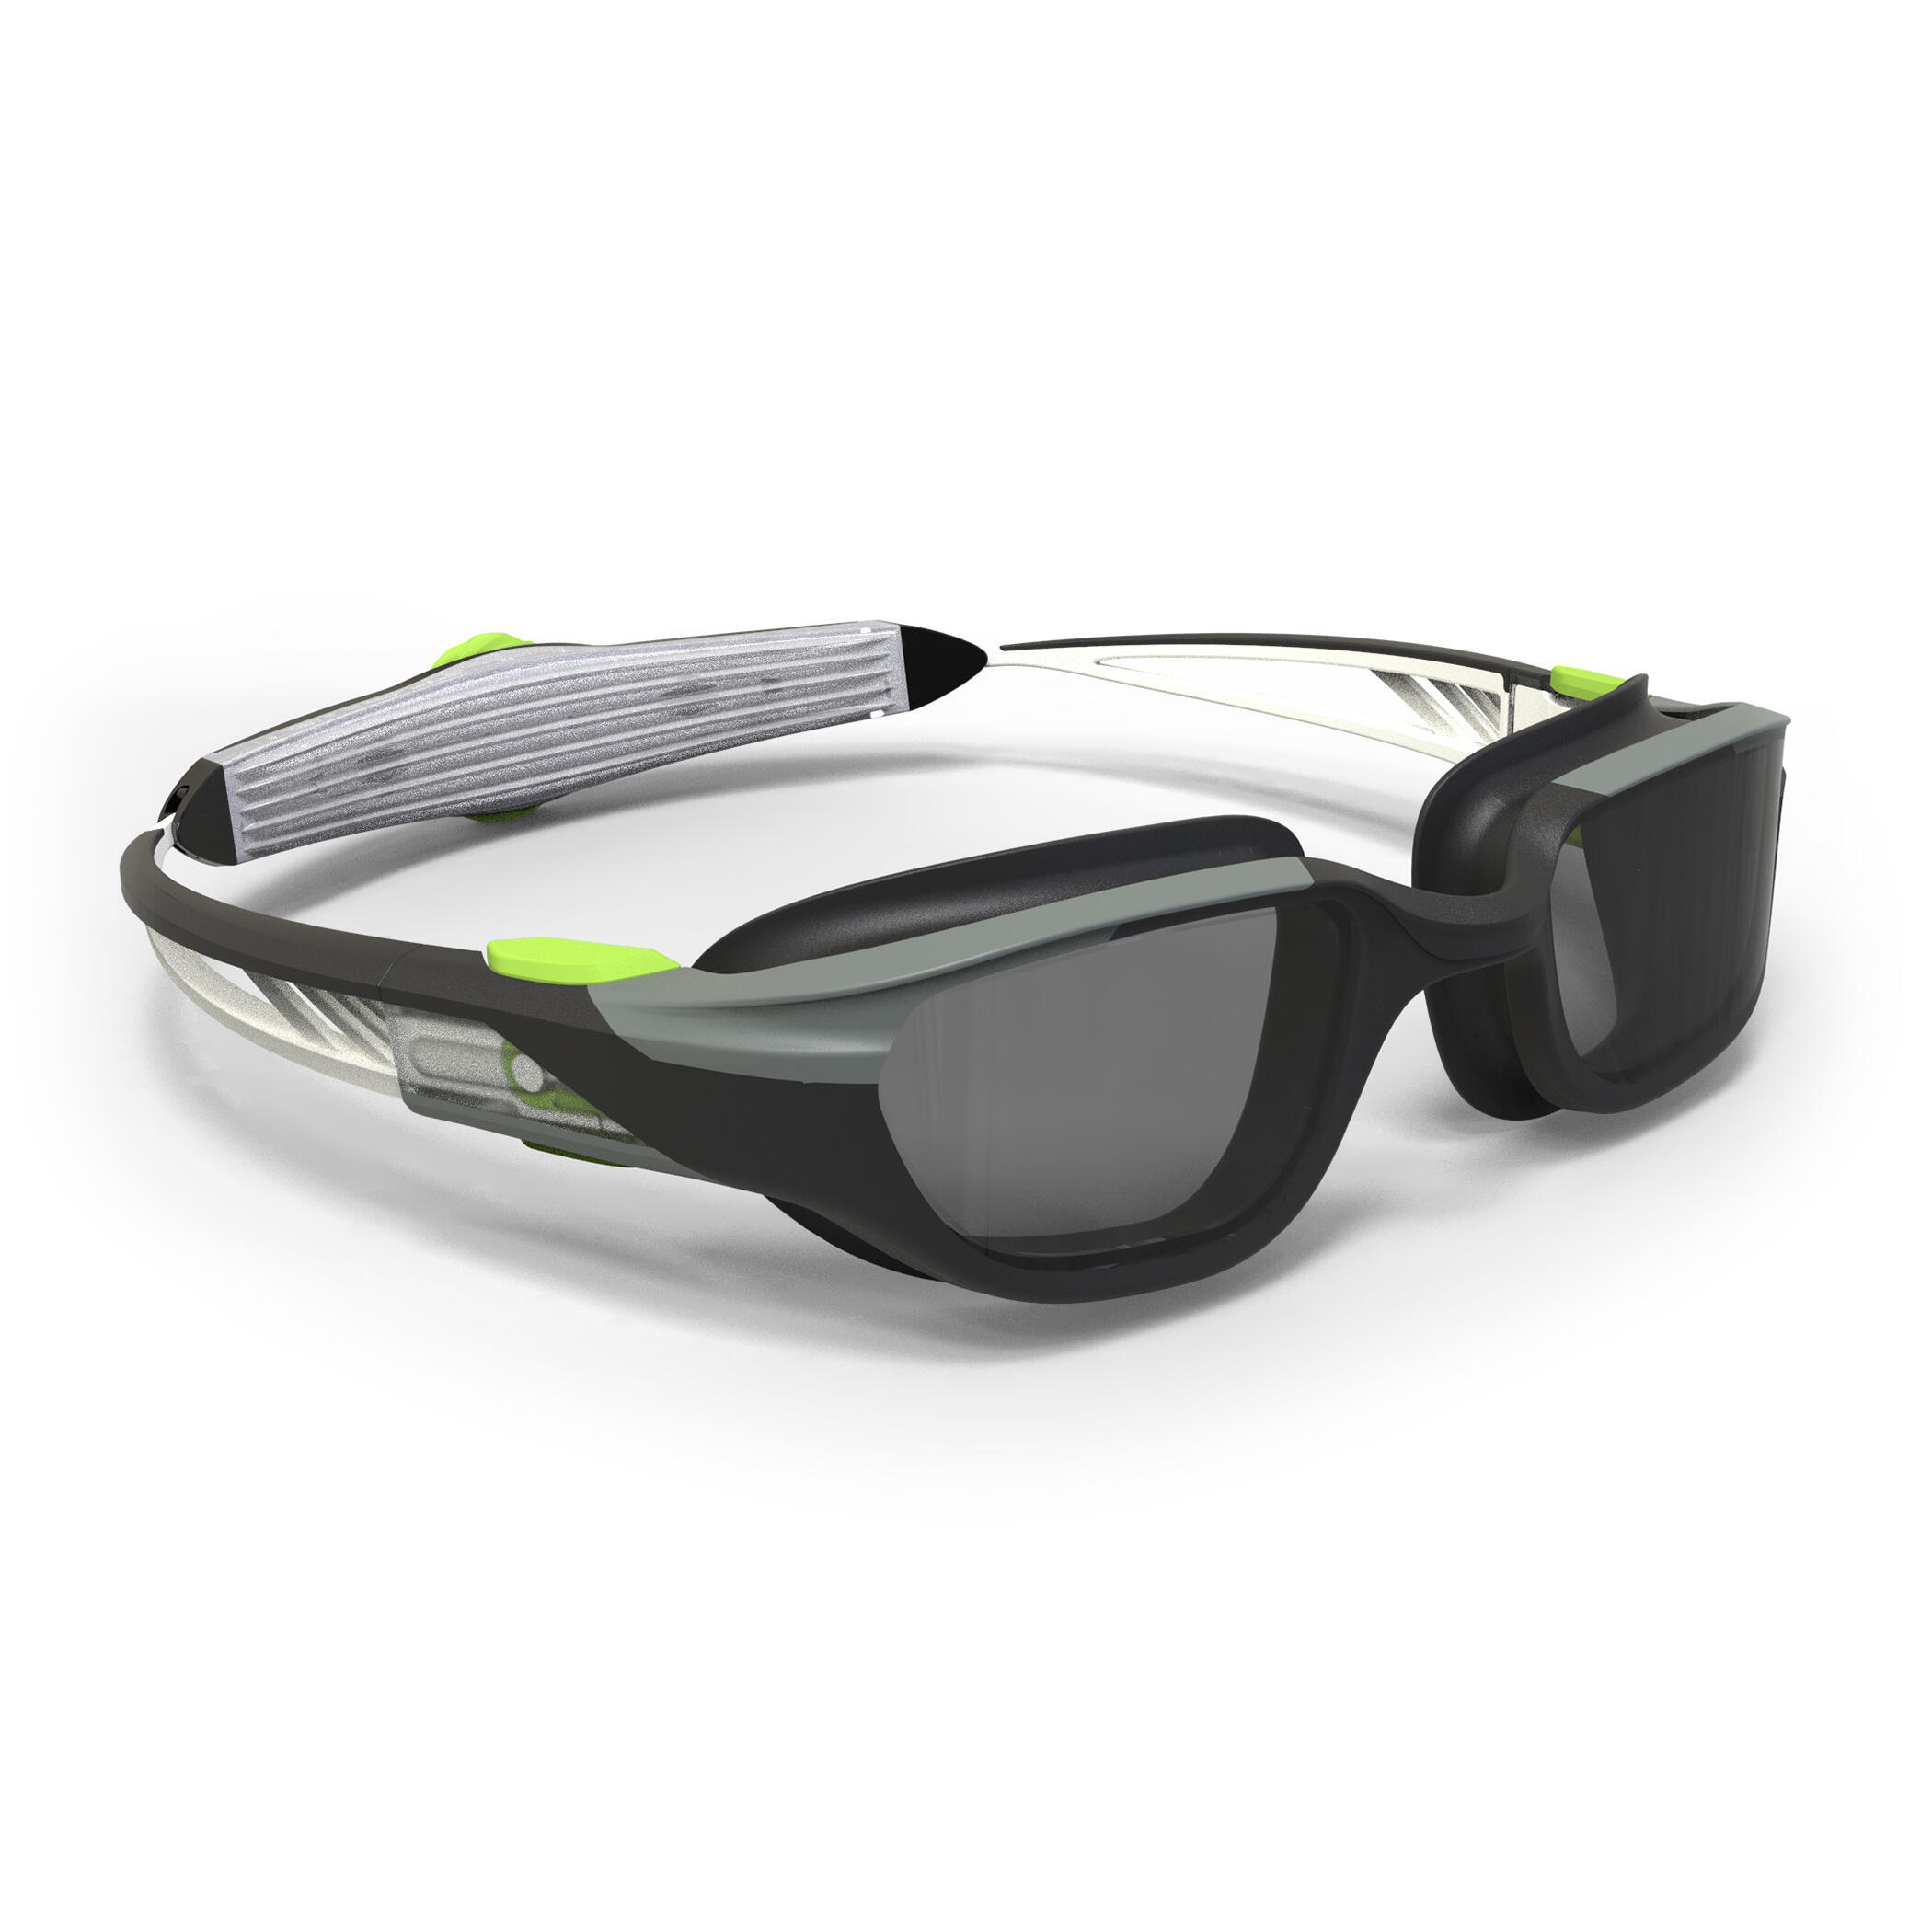 NABAIJI Swimming goggles TURN - Smoked lenses - One size - Black grey yellow